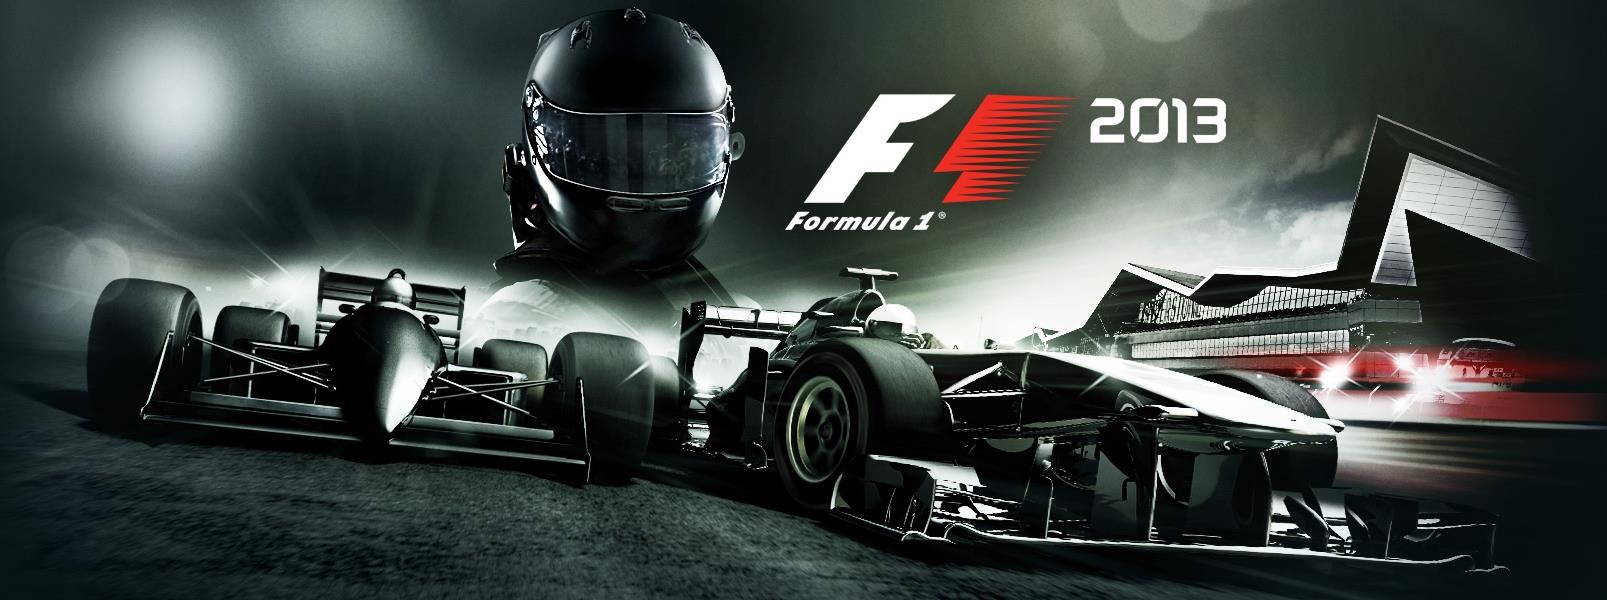 F1 2013 Standard Edition_All_COD_Artwork + Sigla